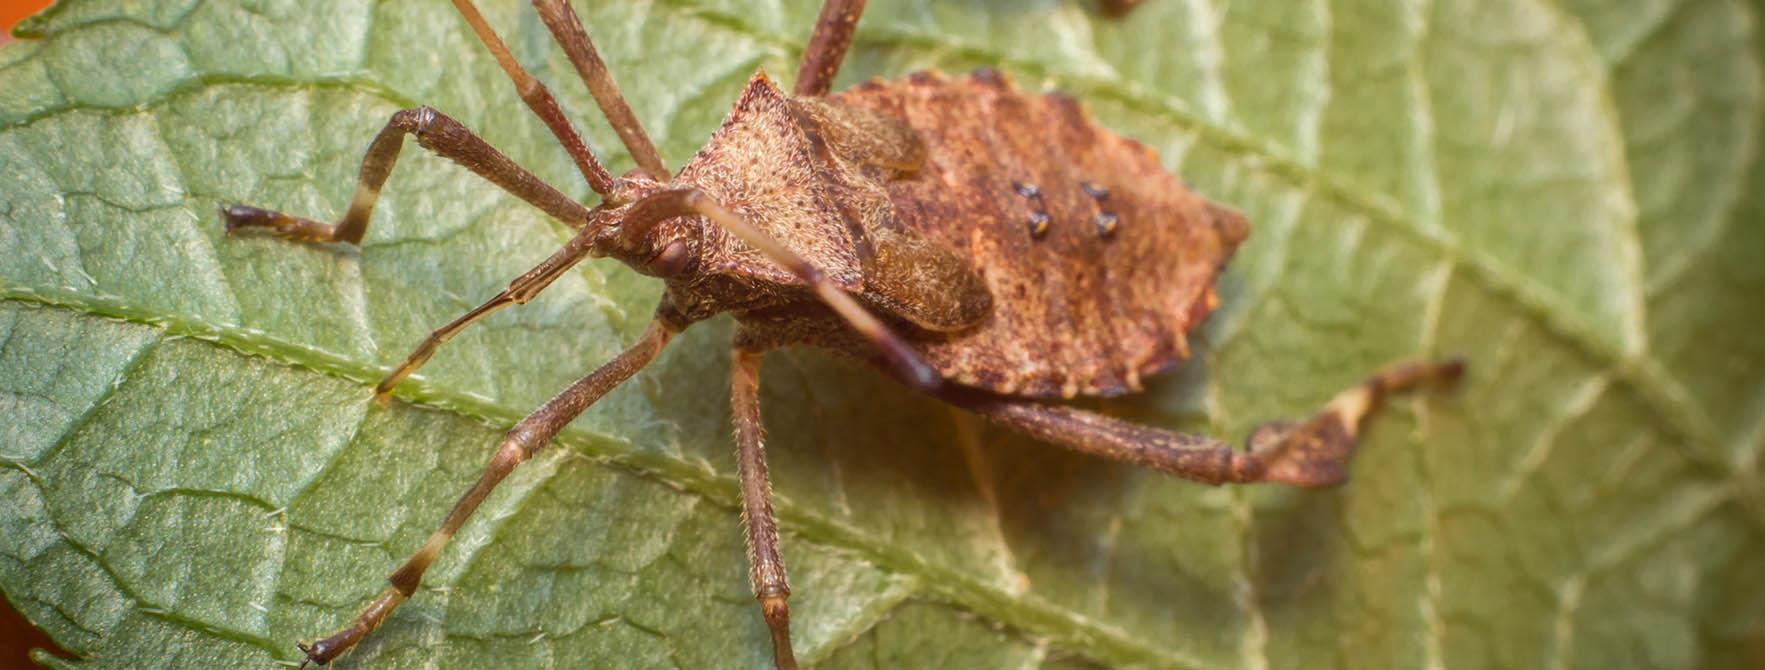 Squash Bug Control & Facts | Kill Squash Bugs